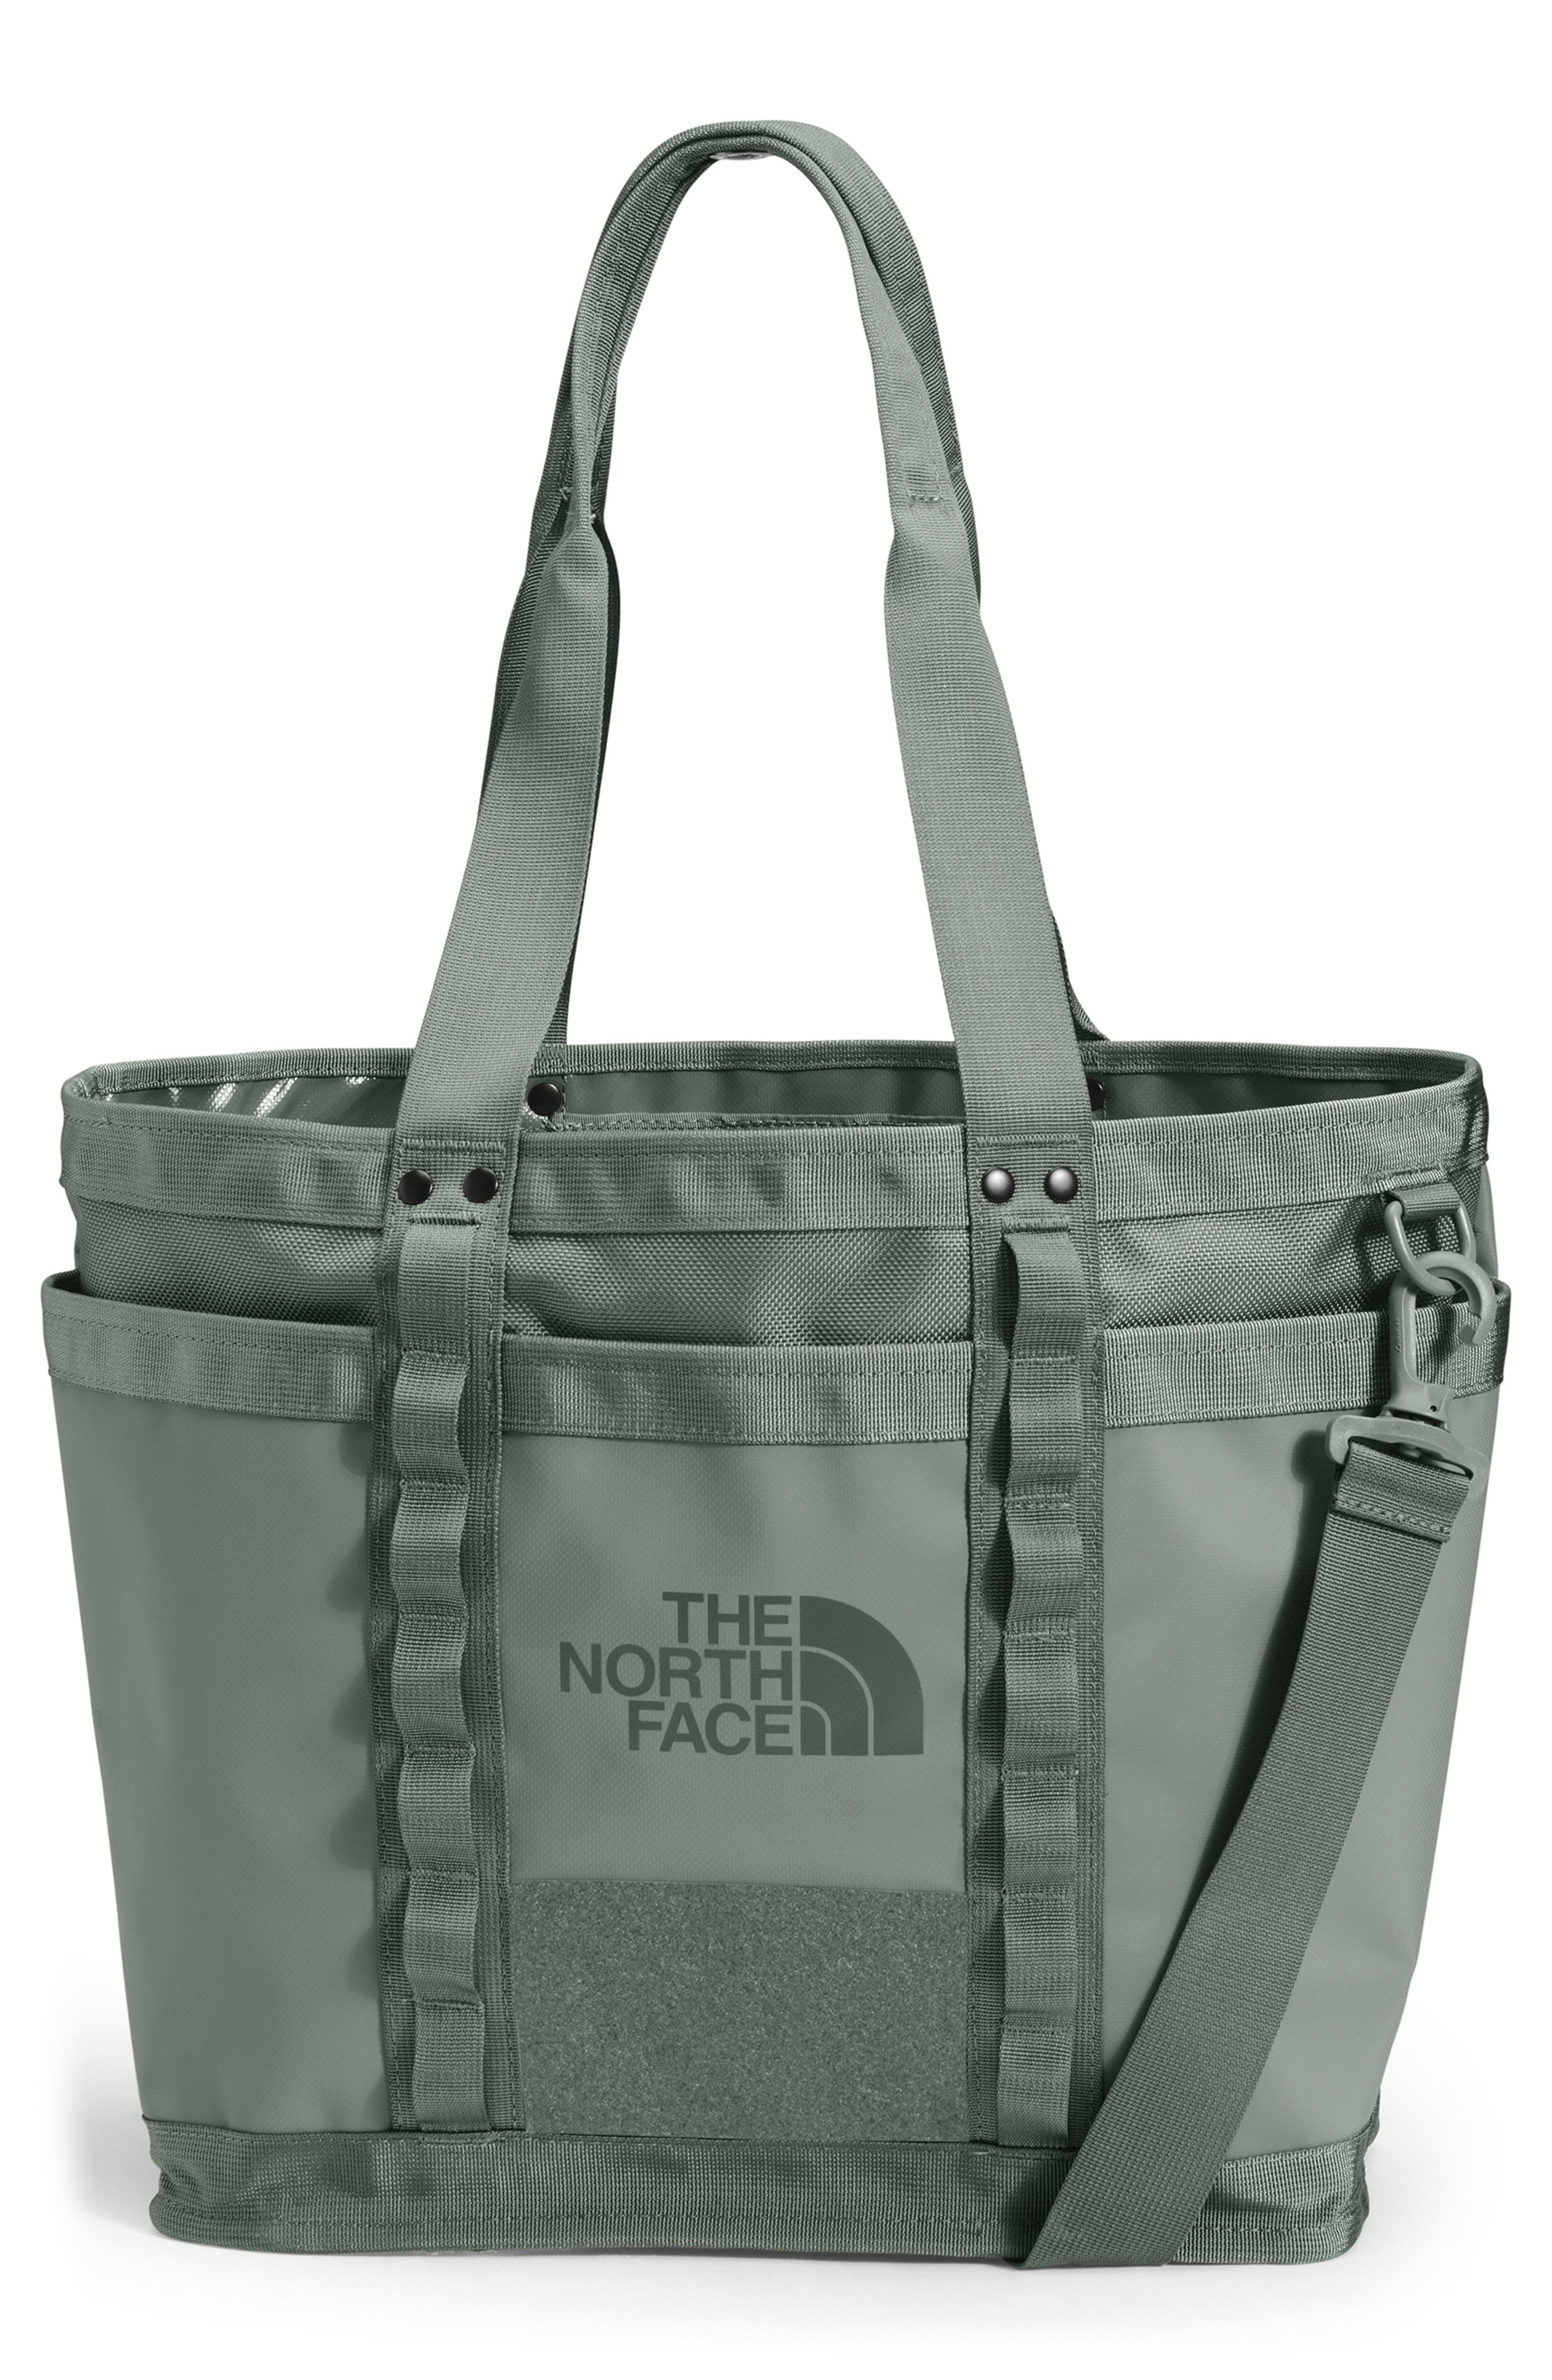 The North Face Handbags, Purses 